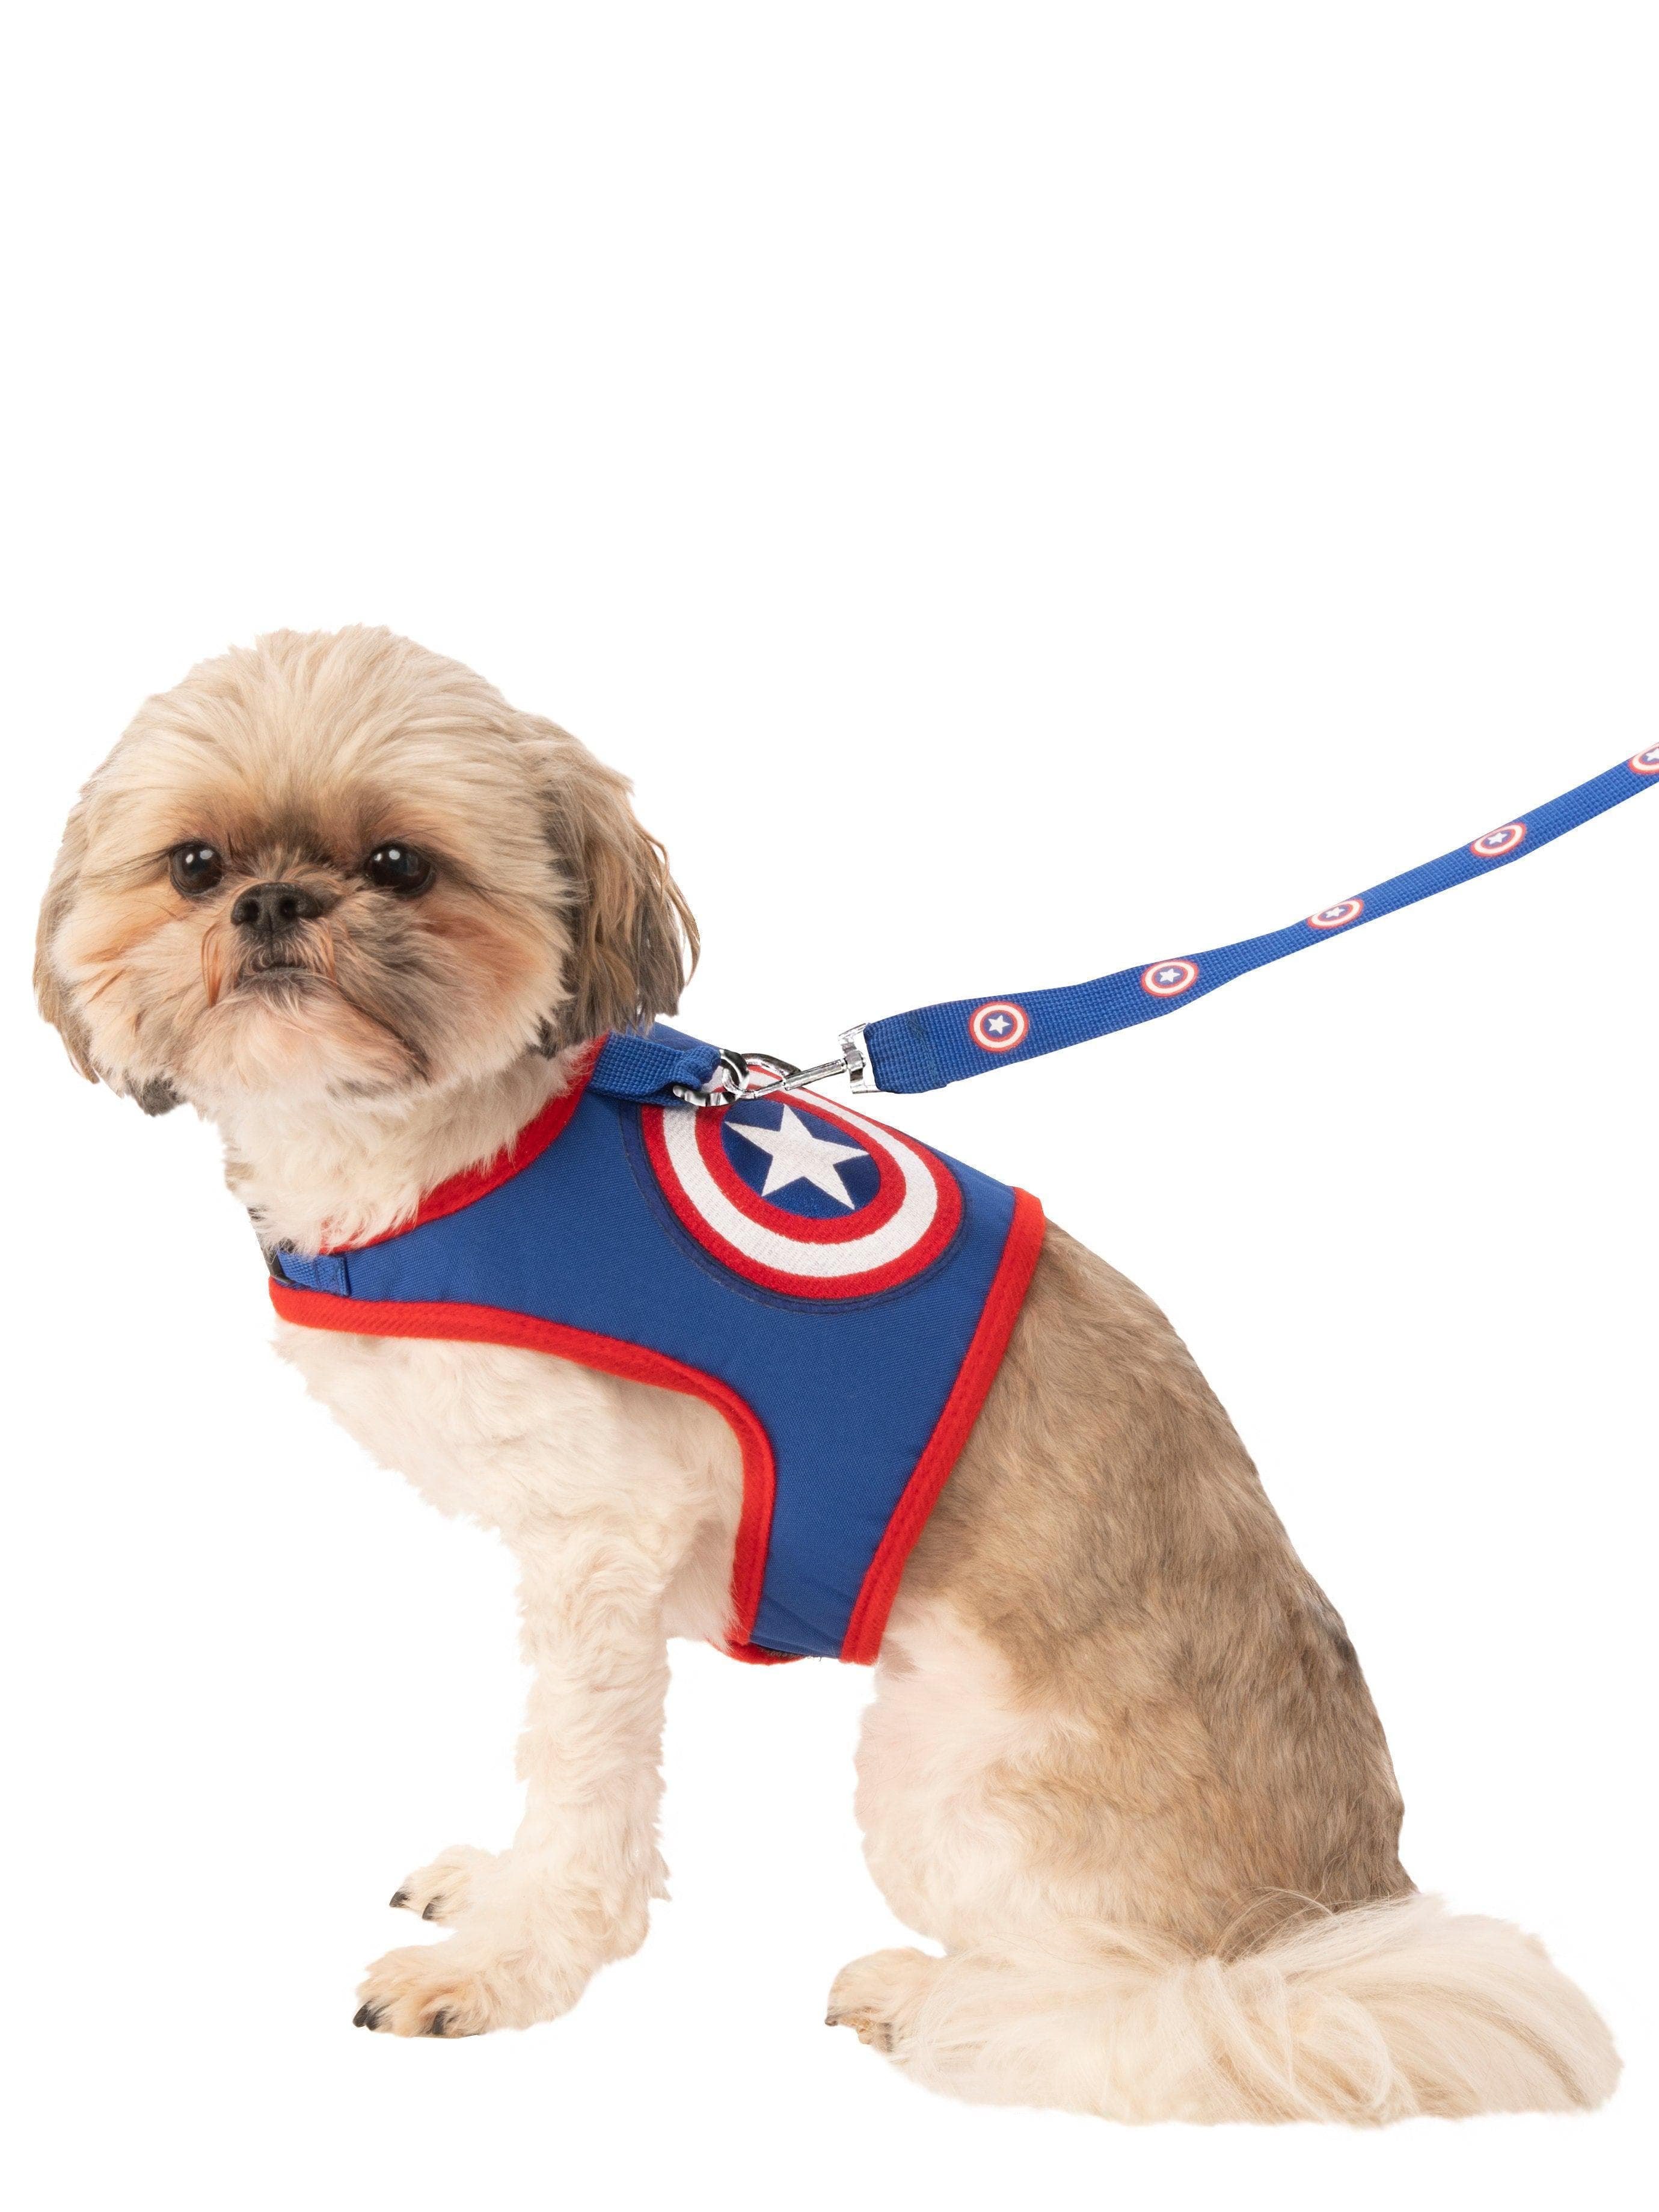 Avengers Captain America Pet Harness and Leash Set - costumes.com